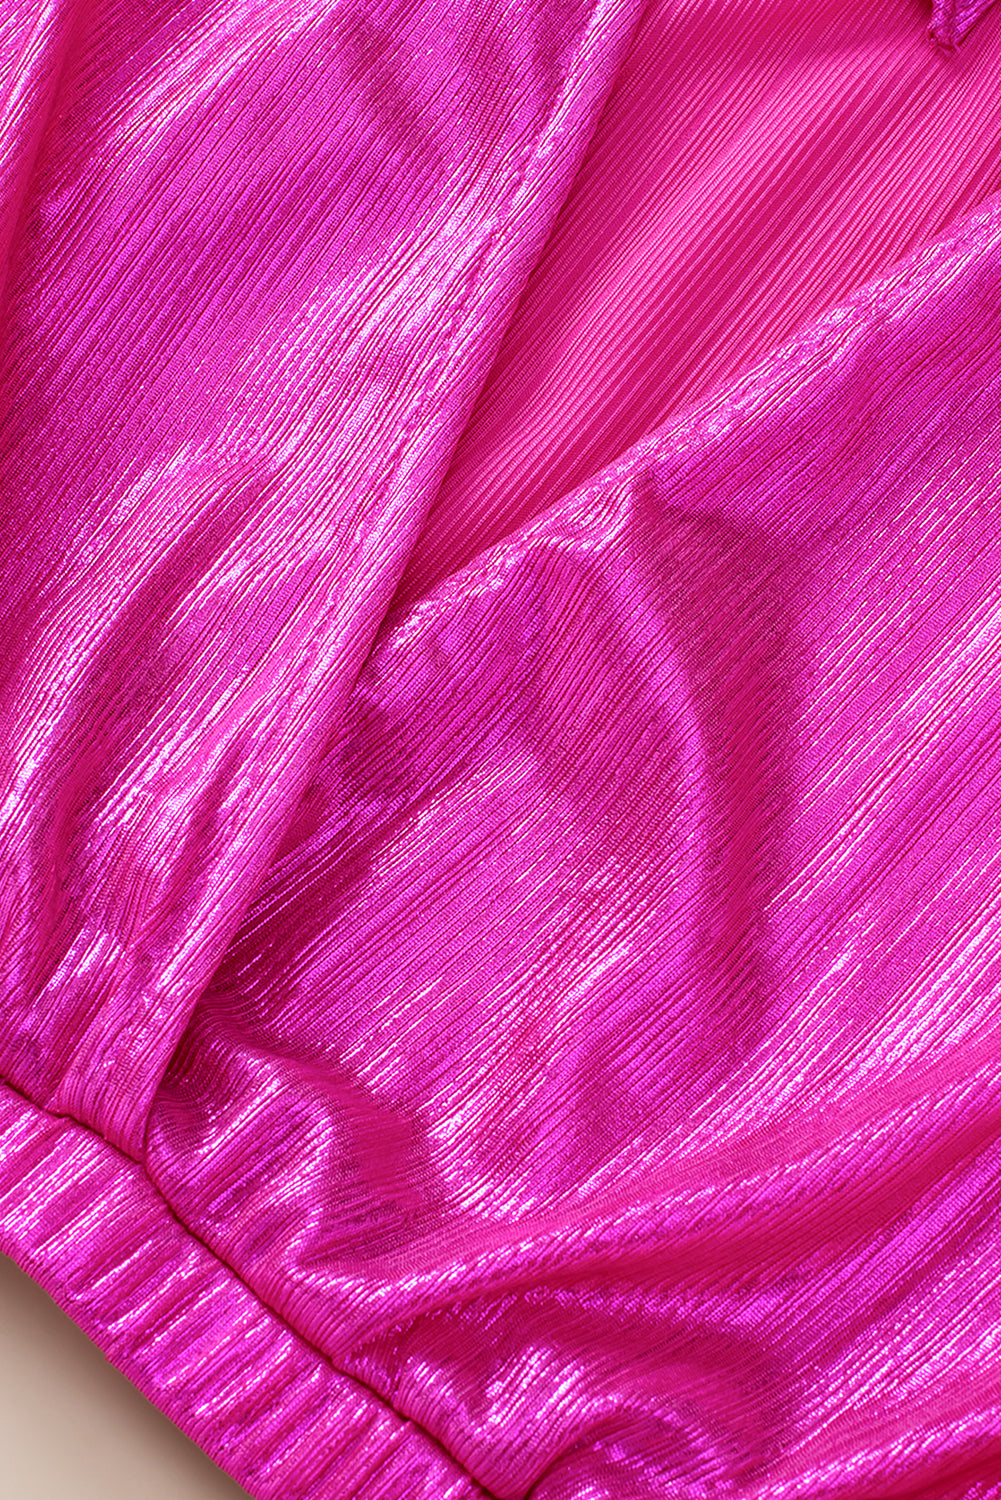 Svetlo roza bluza brez hrbta z naborkimi rokavi